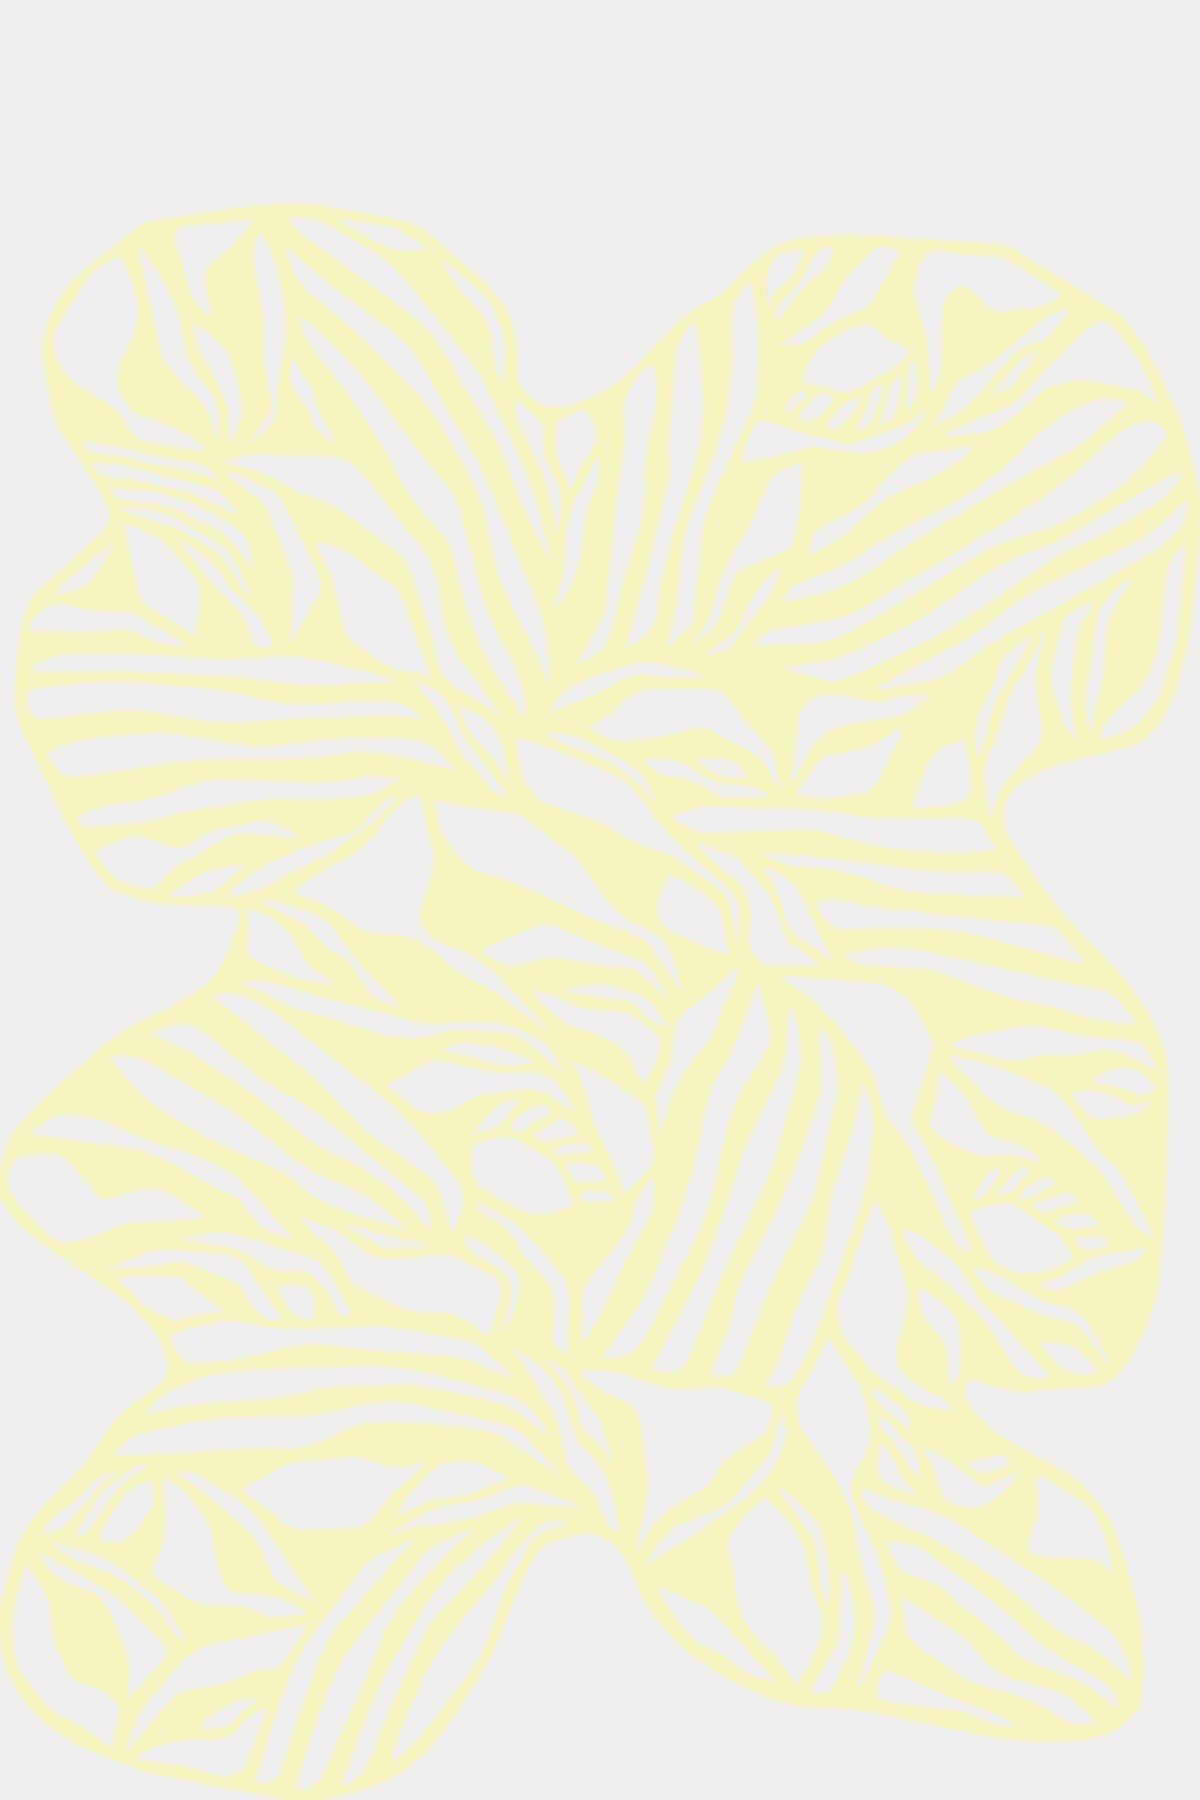 Studio sur Papercut A4 Organic Rectangle, jaune